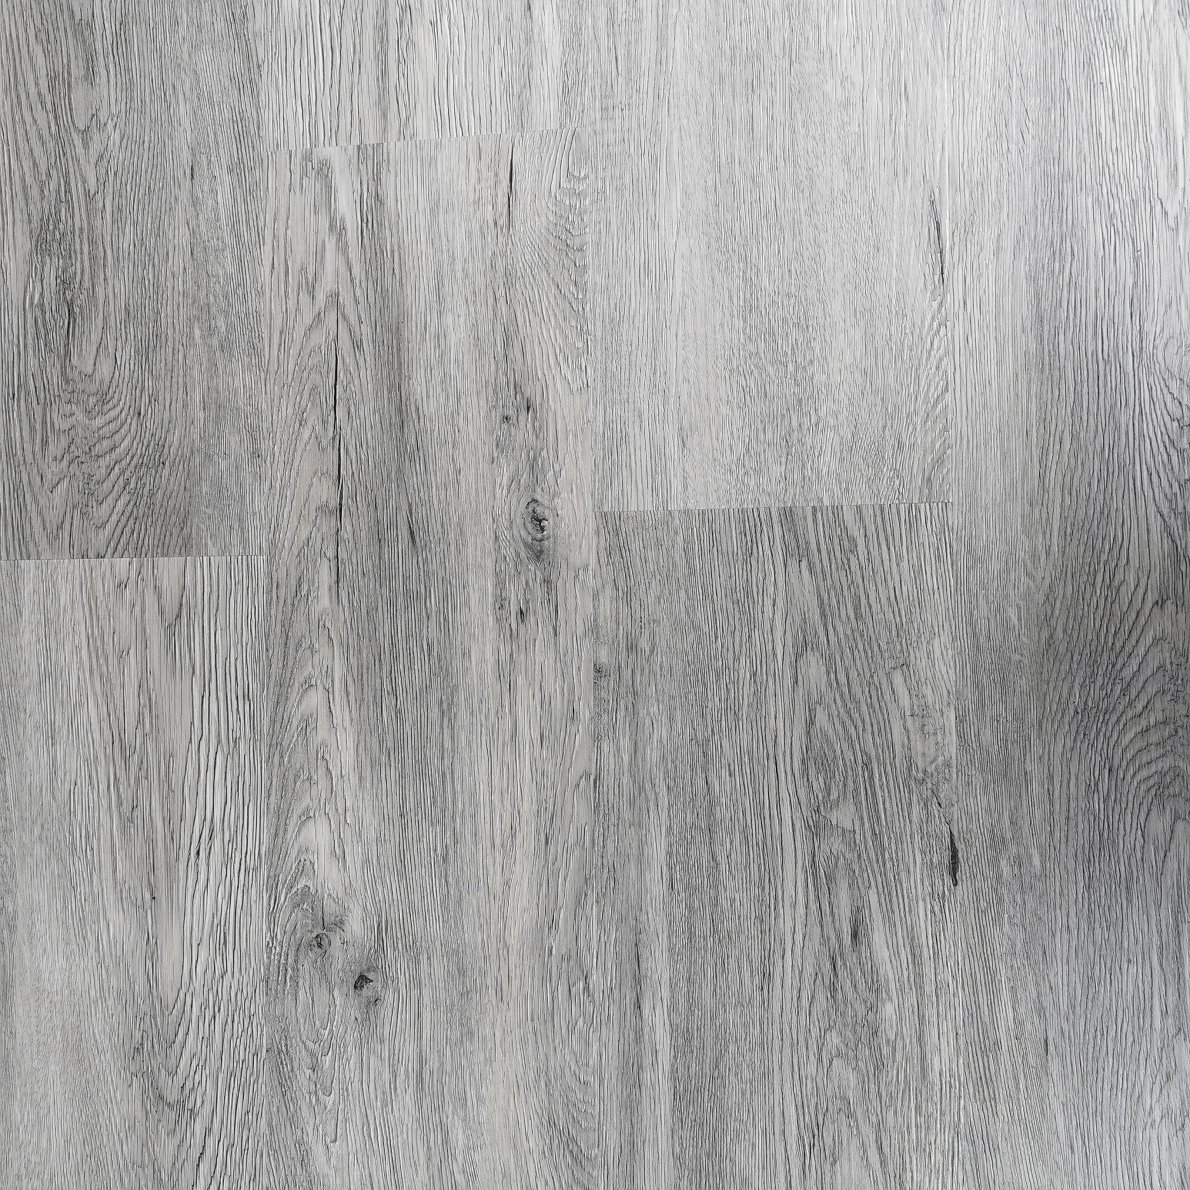 Popular Design for Real Hardwood Floors -
 KANGTON click LVT flooring with free sample and factory price – Kangton